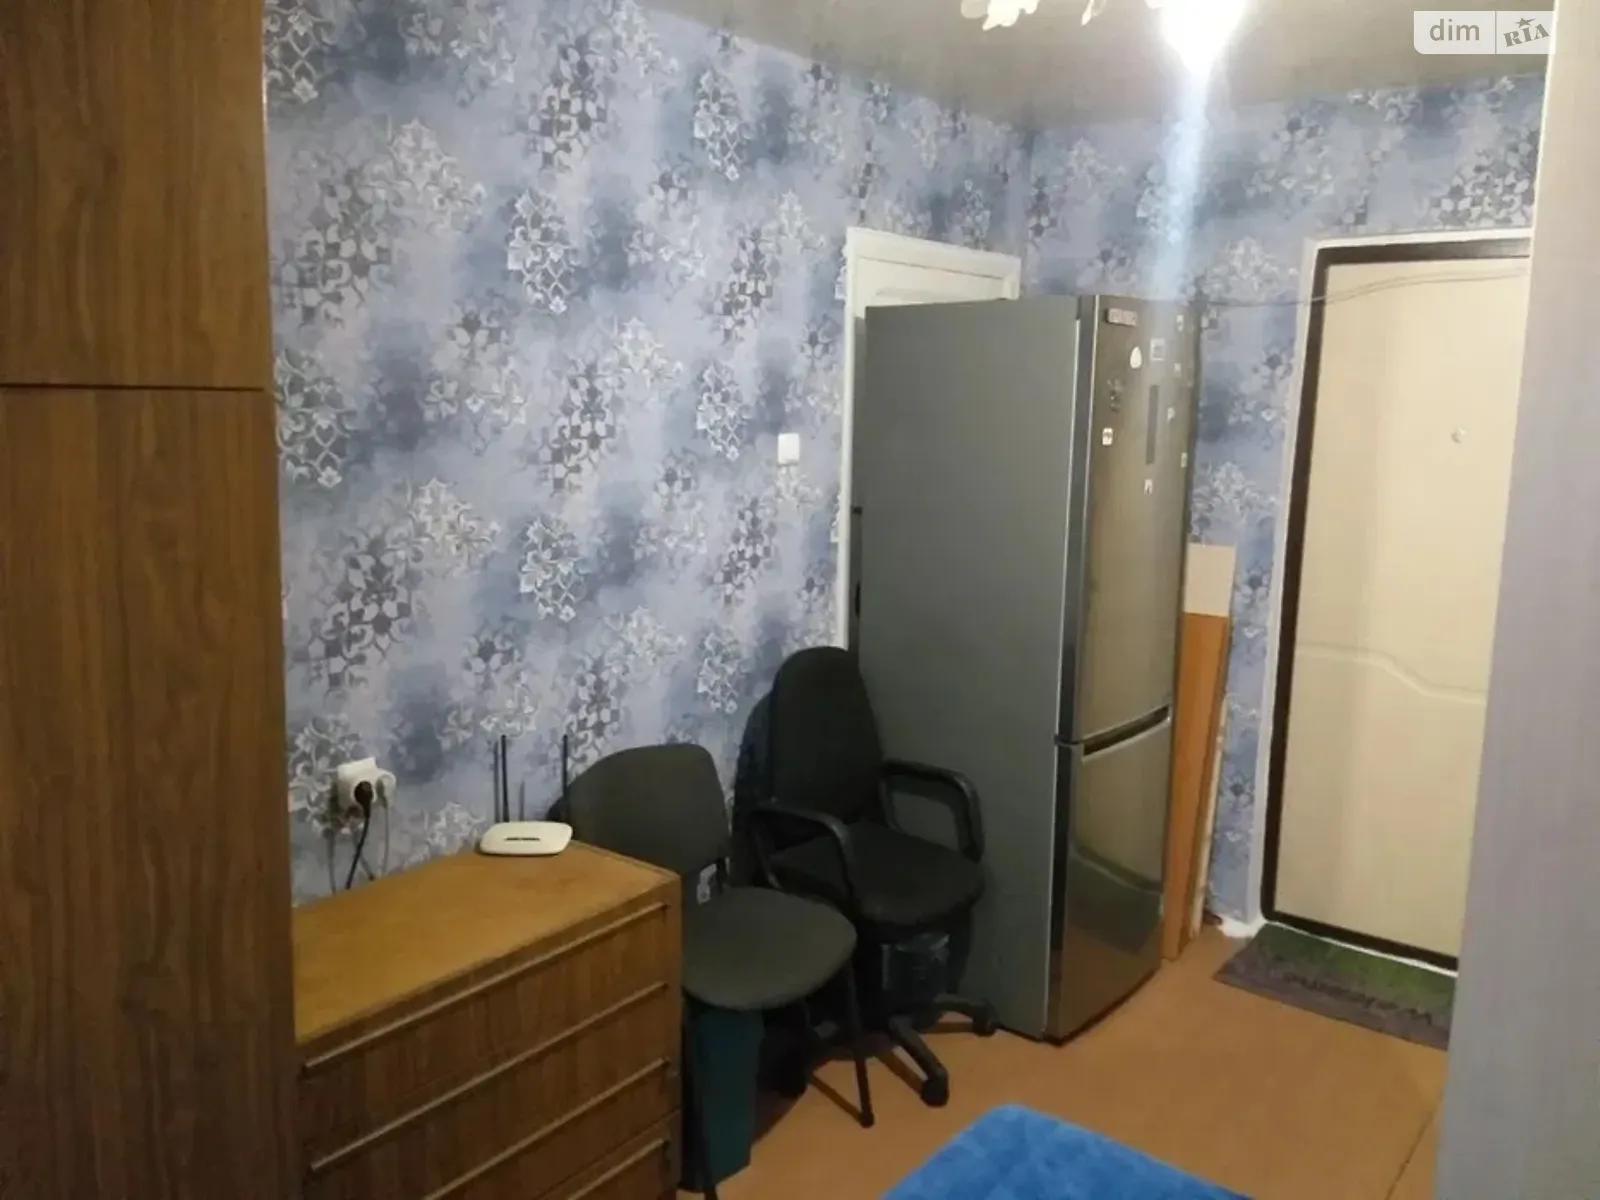 Продается комната 22 кв. м в Одессе, цена: 24000 $ - фото 1